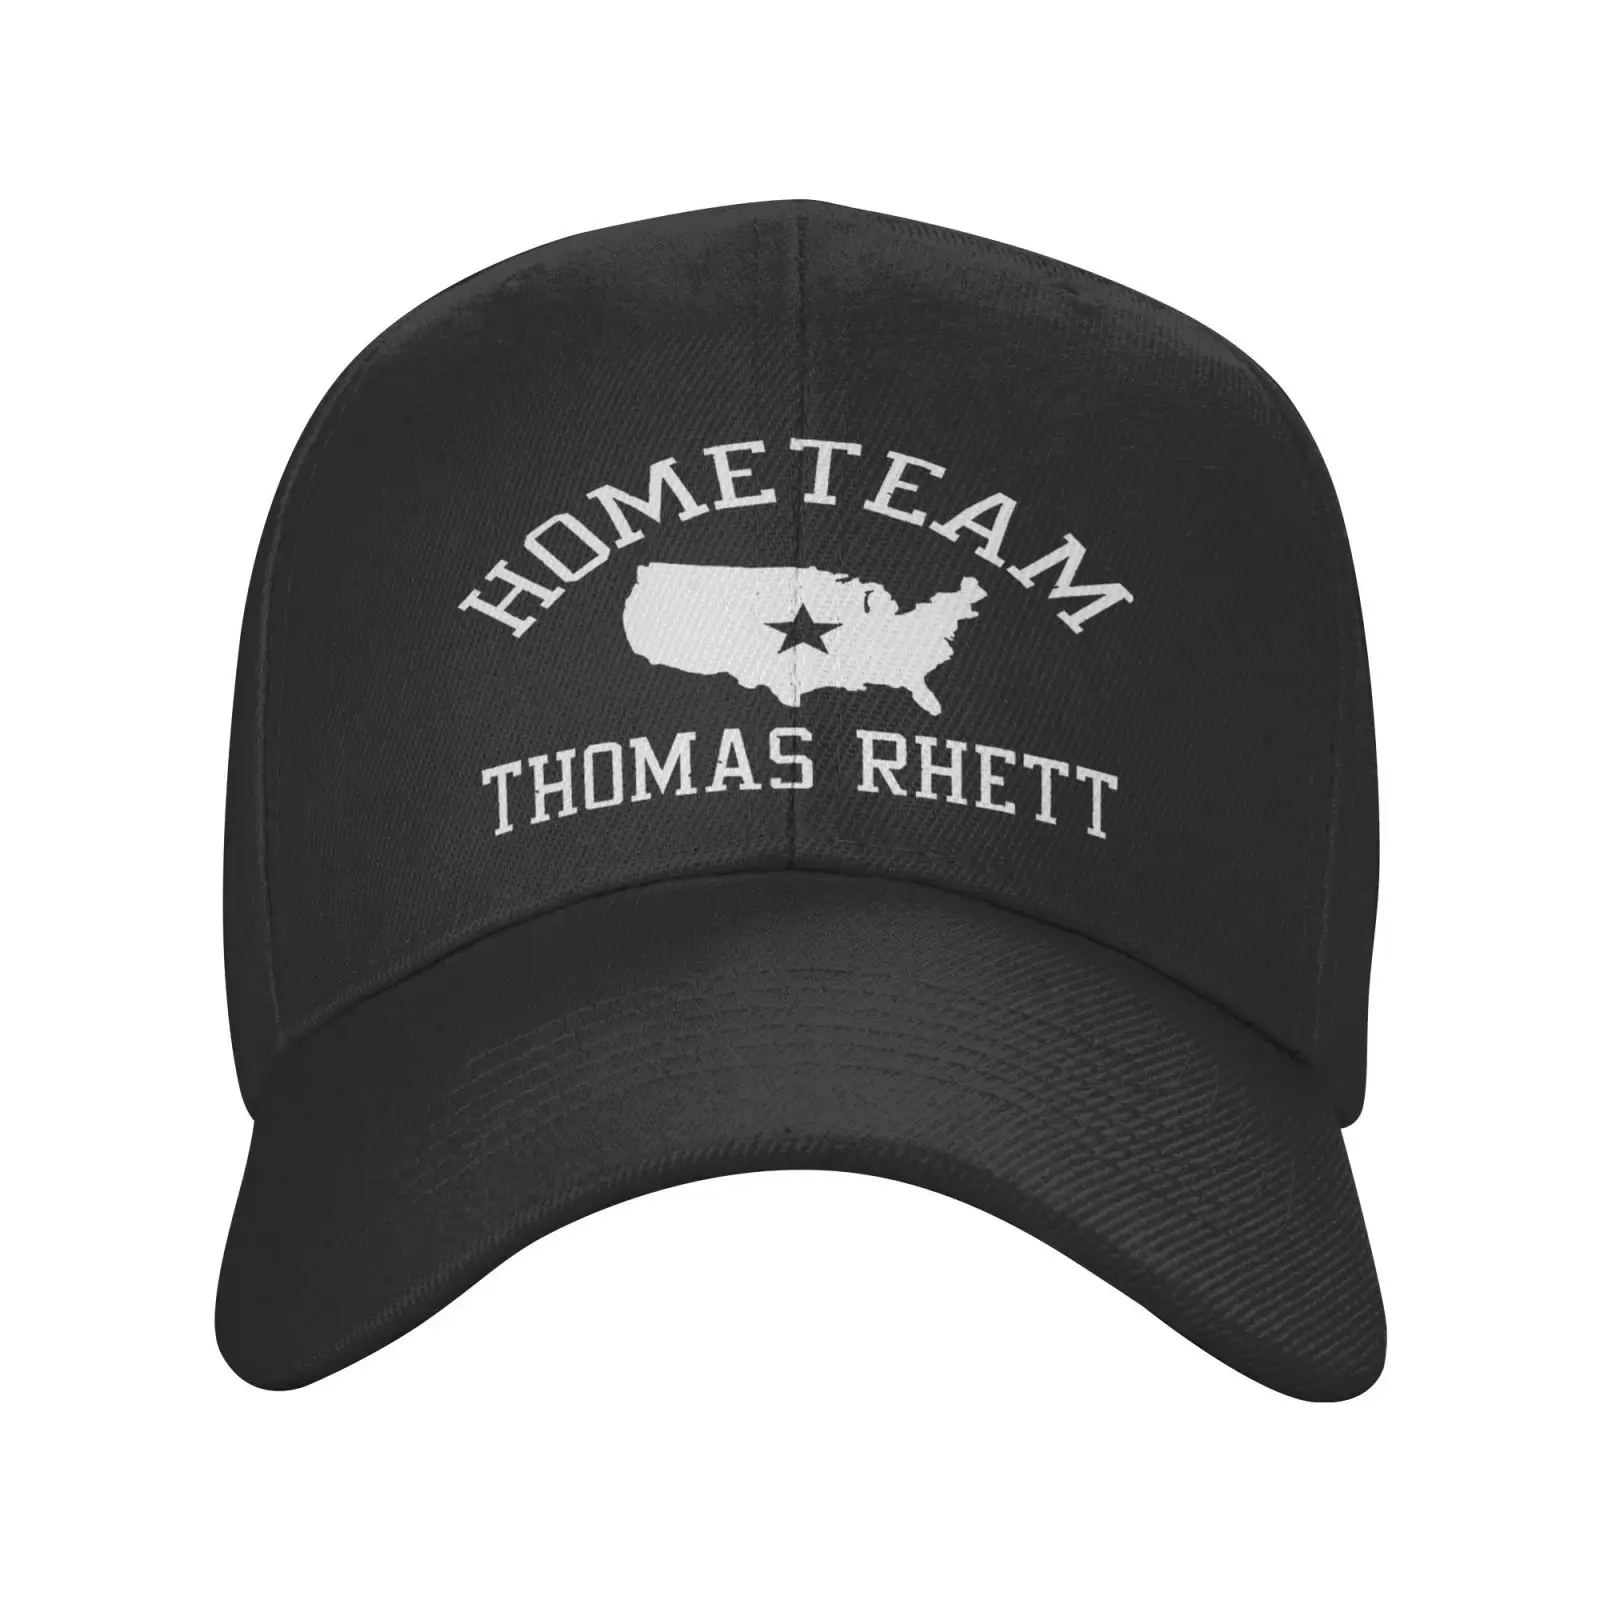 

Официальная Кепка Thomas Rhett Hometeam America, берет, мужская и женская шапка, облегающие шапки для мужчин, кепка Cowgirl s для мужчин, Панама, летняя шапка ...